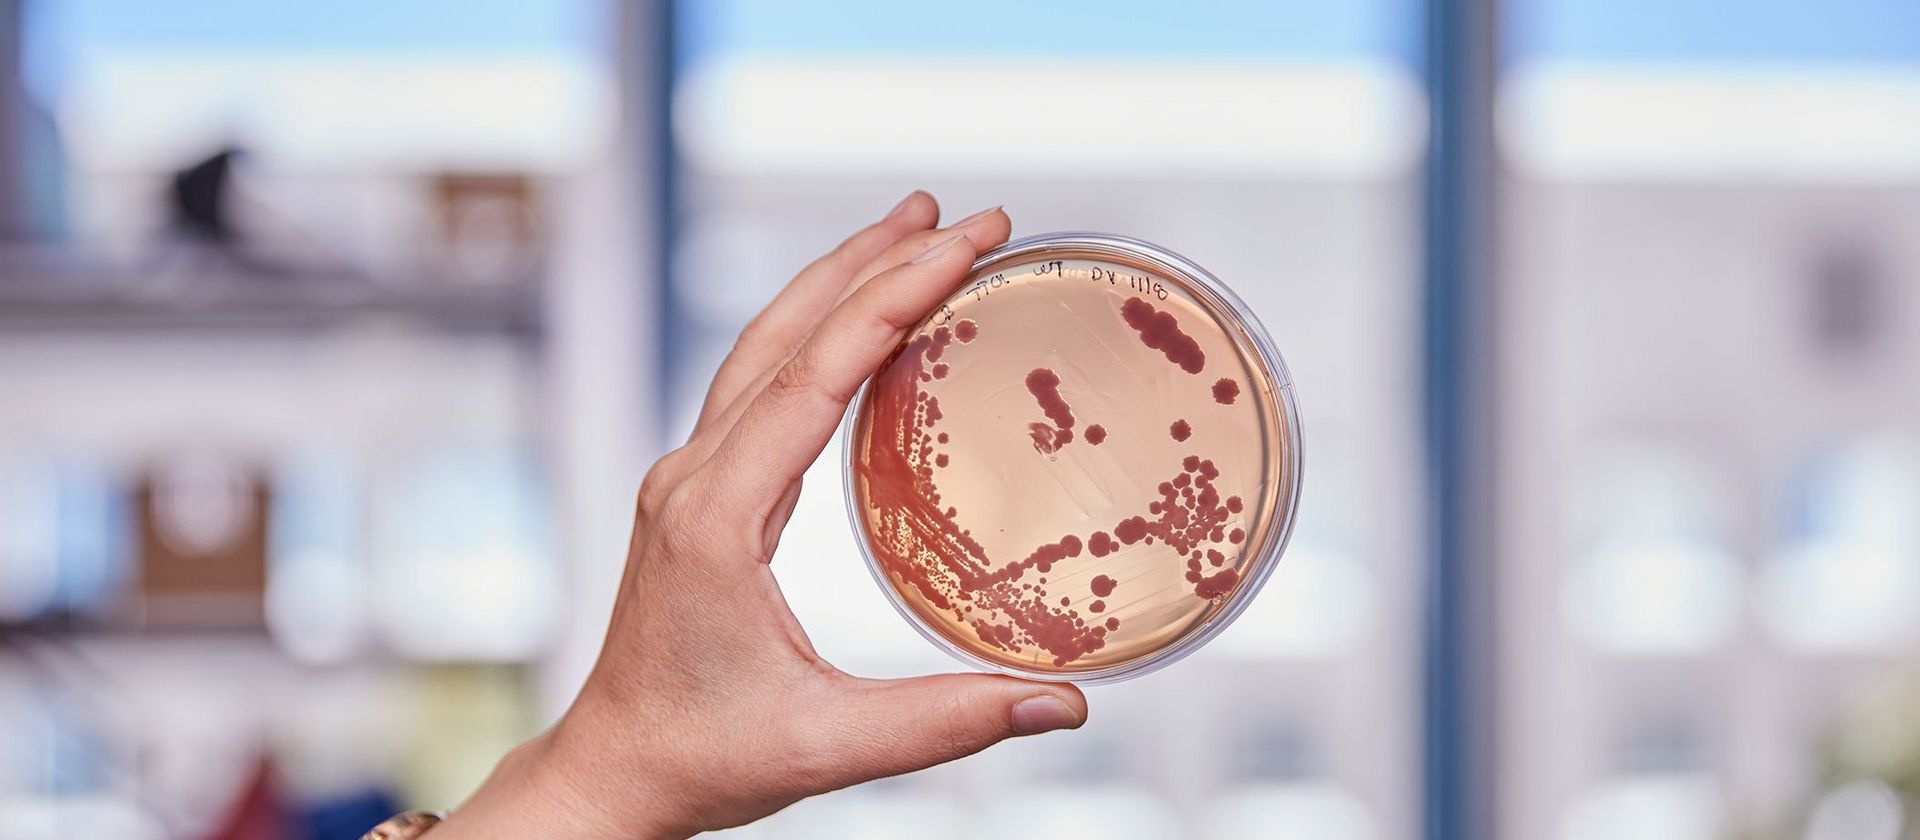 Petri dish with bacteria